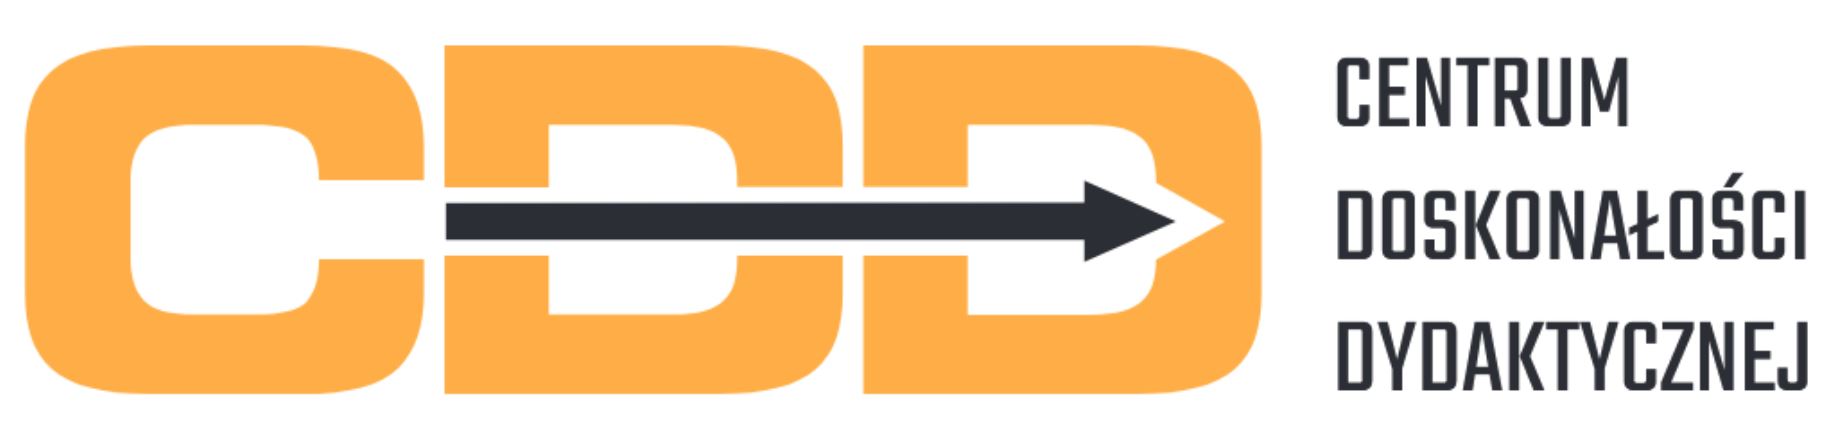 cdd-logo.jpg